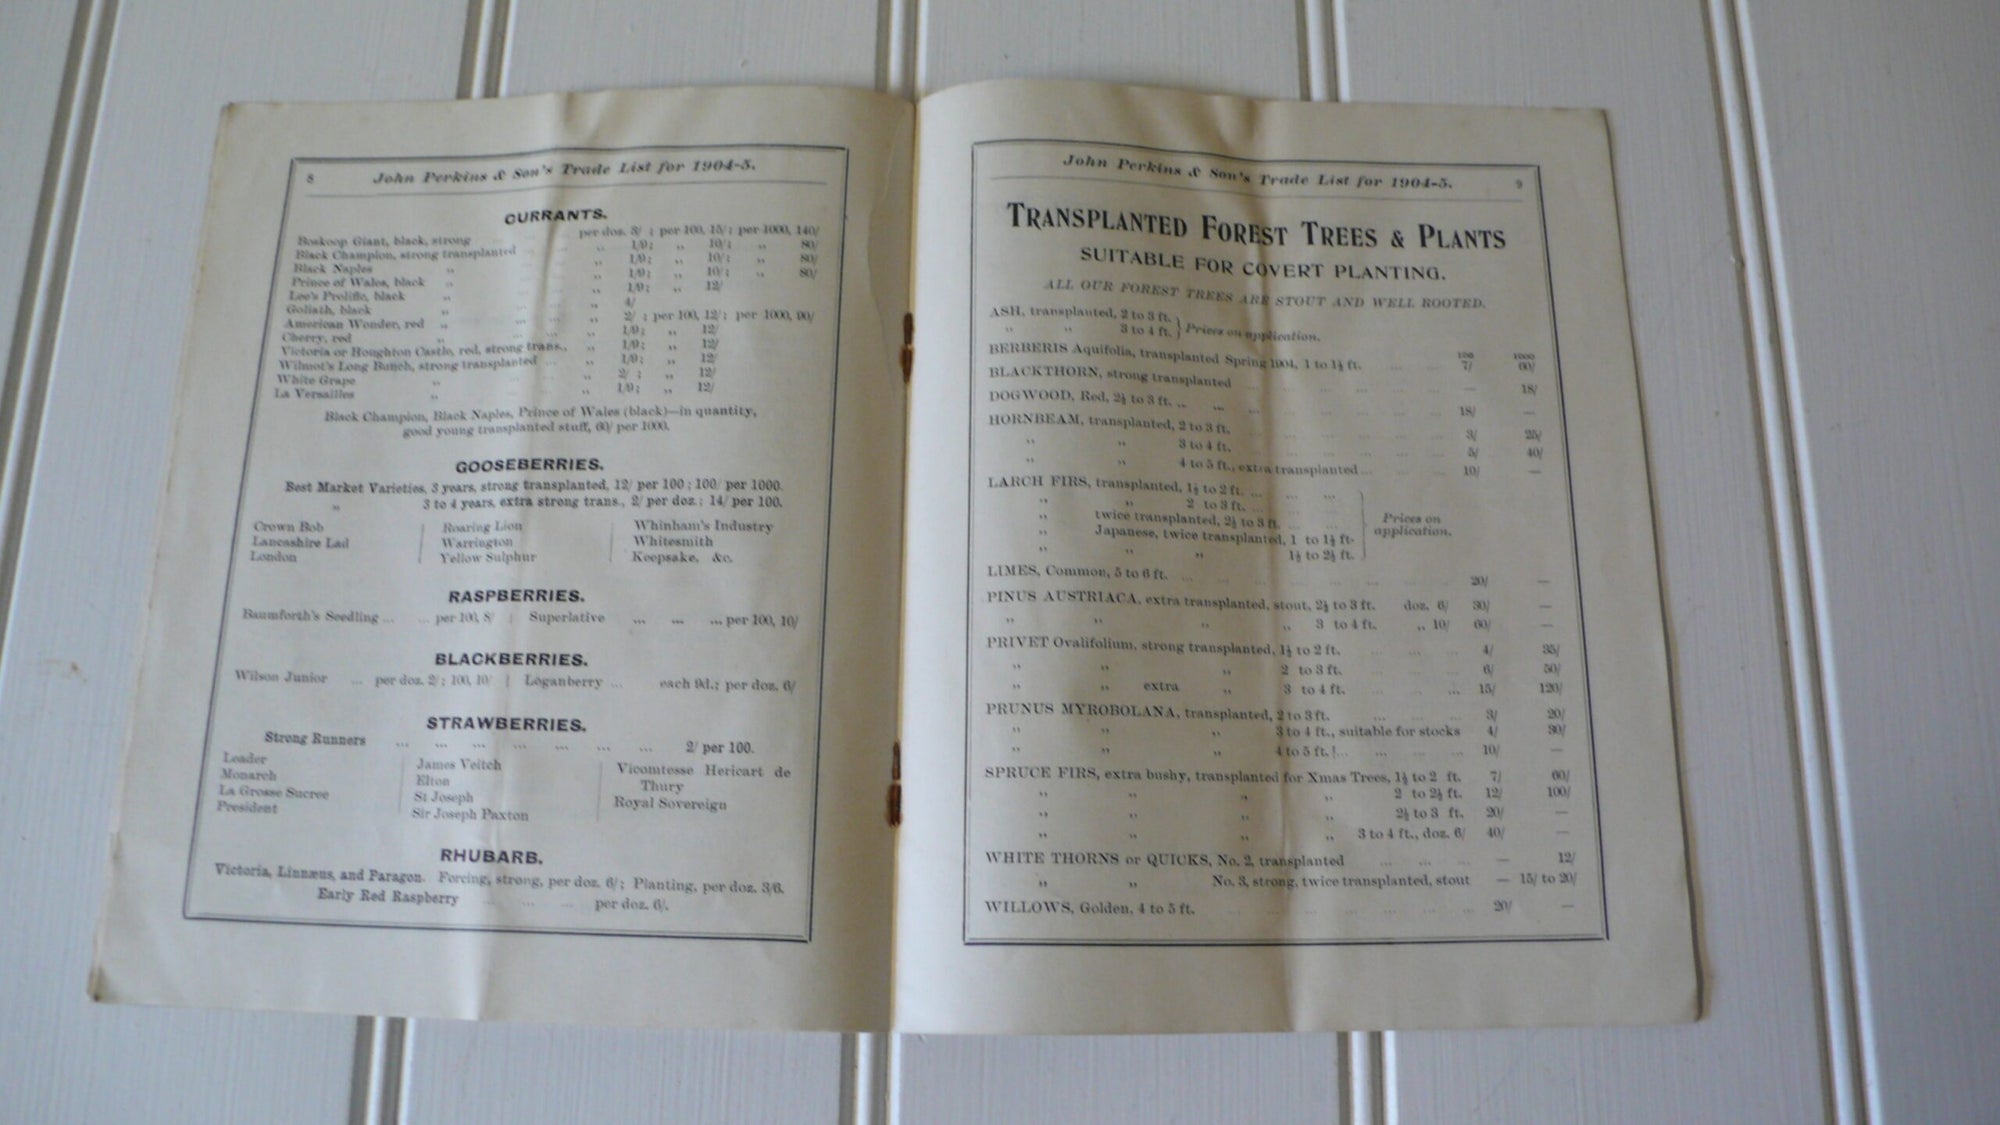 John Perkins Trade Catalogue, 1904 - 1905